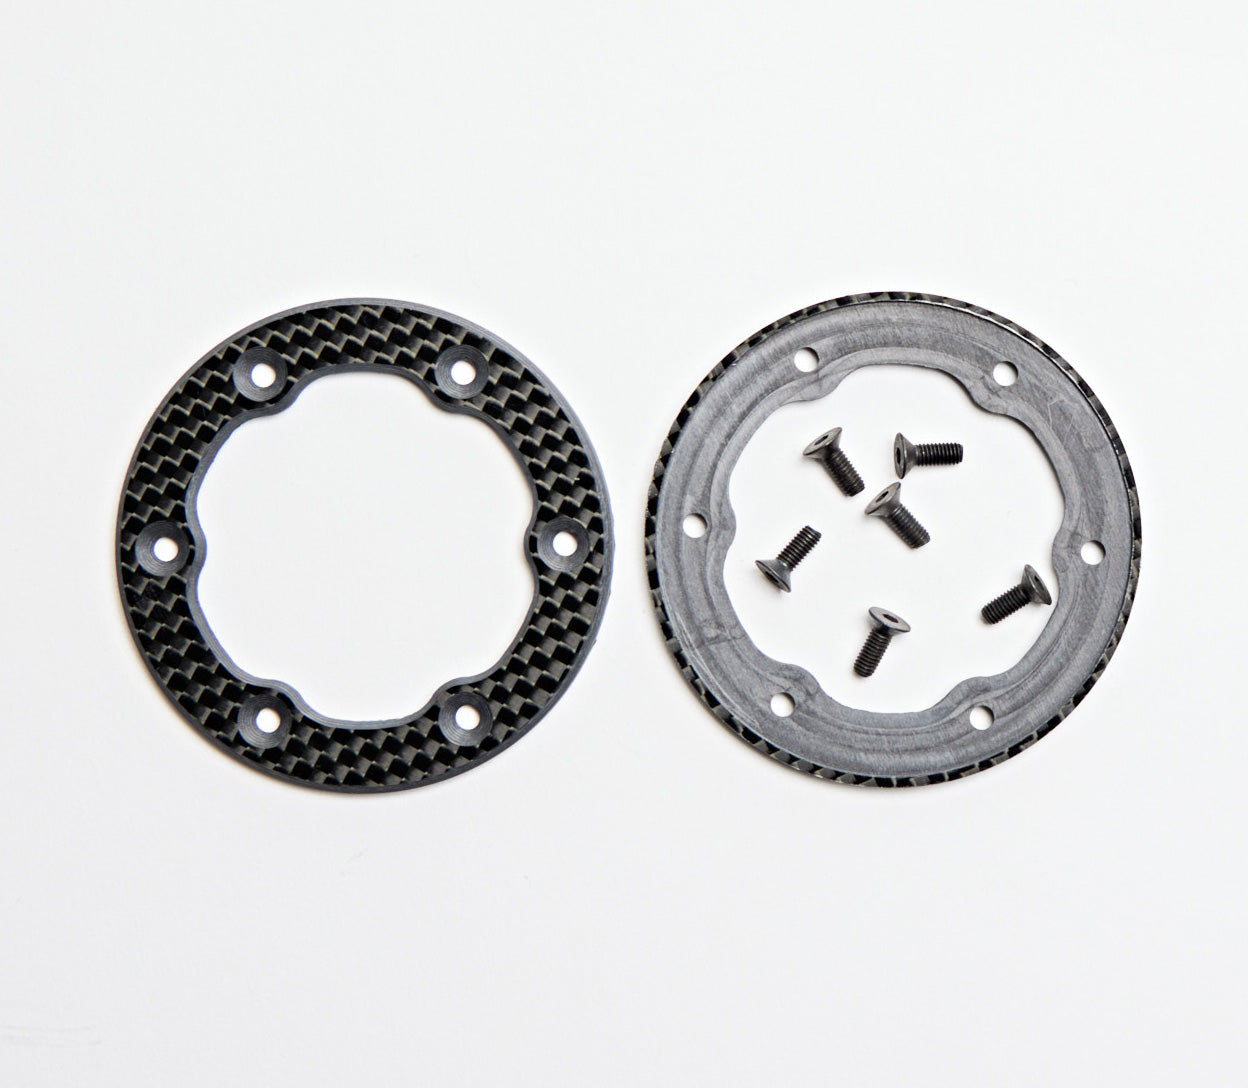 Beadlock Carbon Fiber Rings – Proline Split Six & F-11